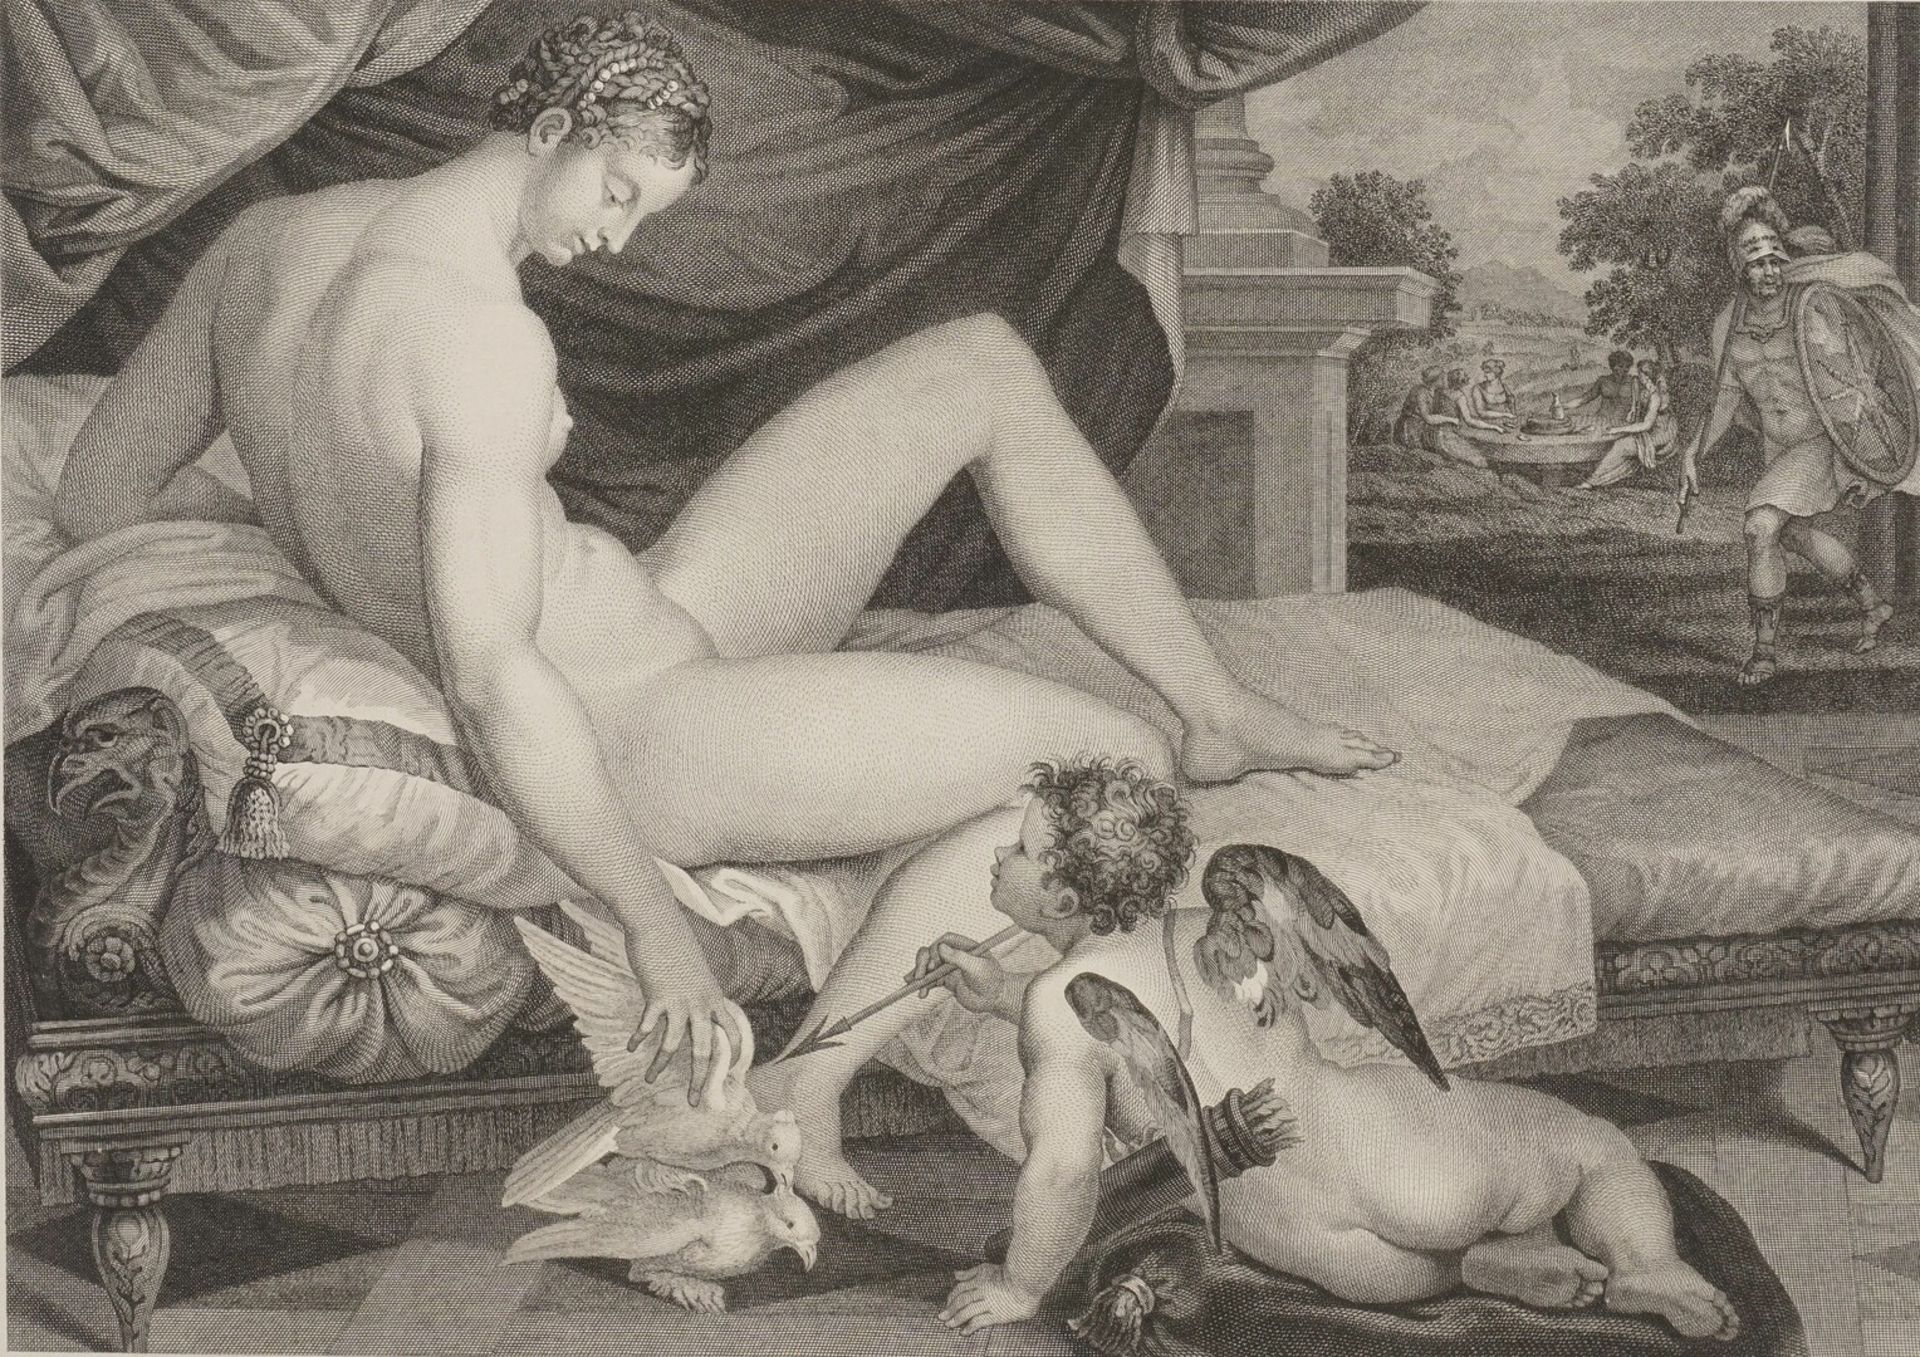 Lambert Sustris, "Vénus et l'Amour" (Venus und Amor)